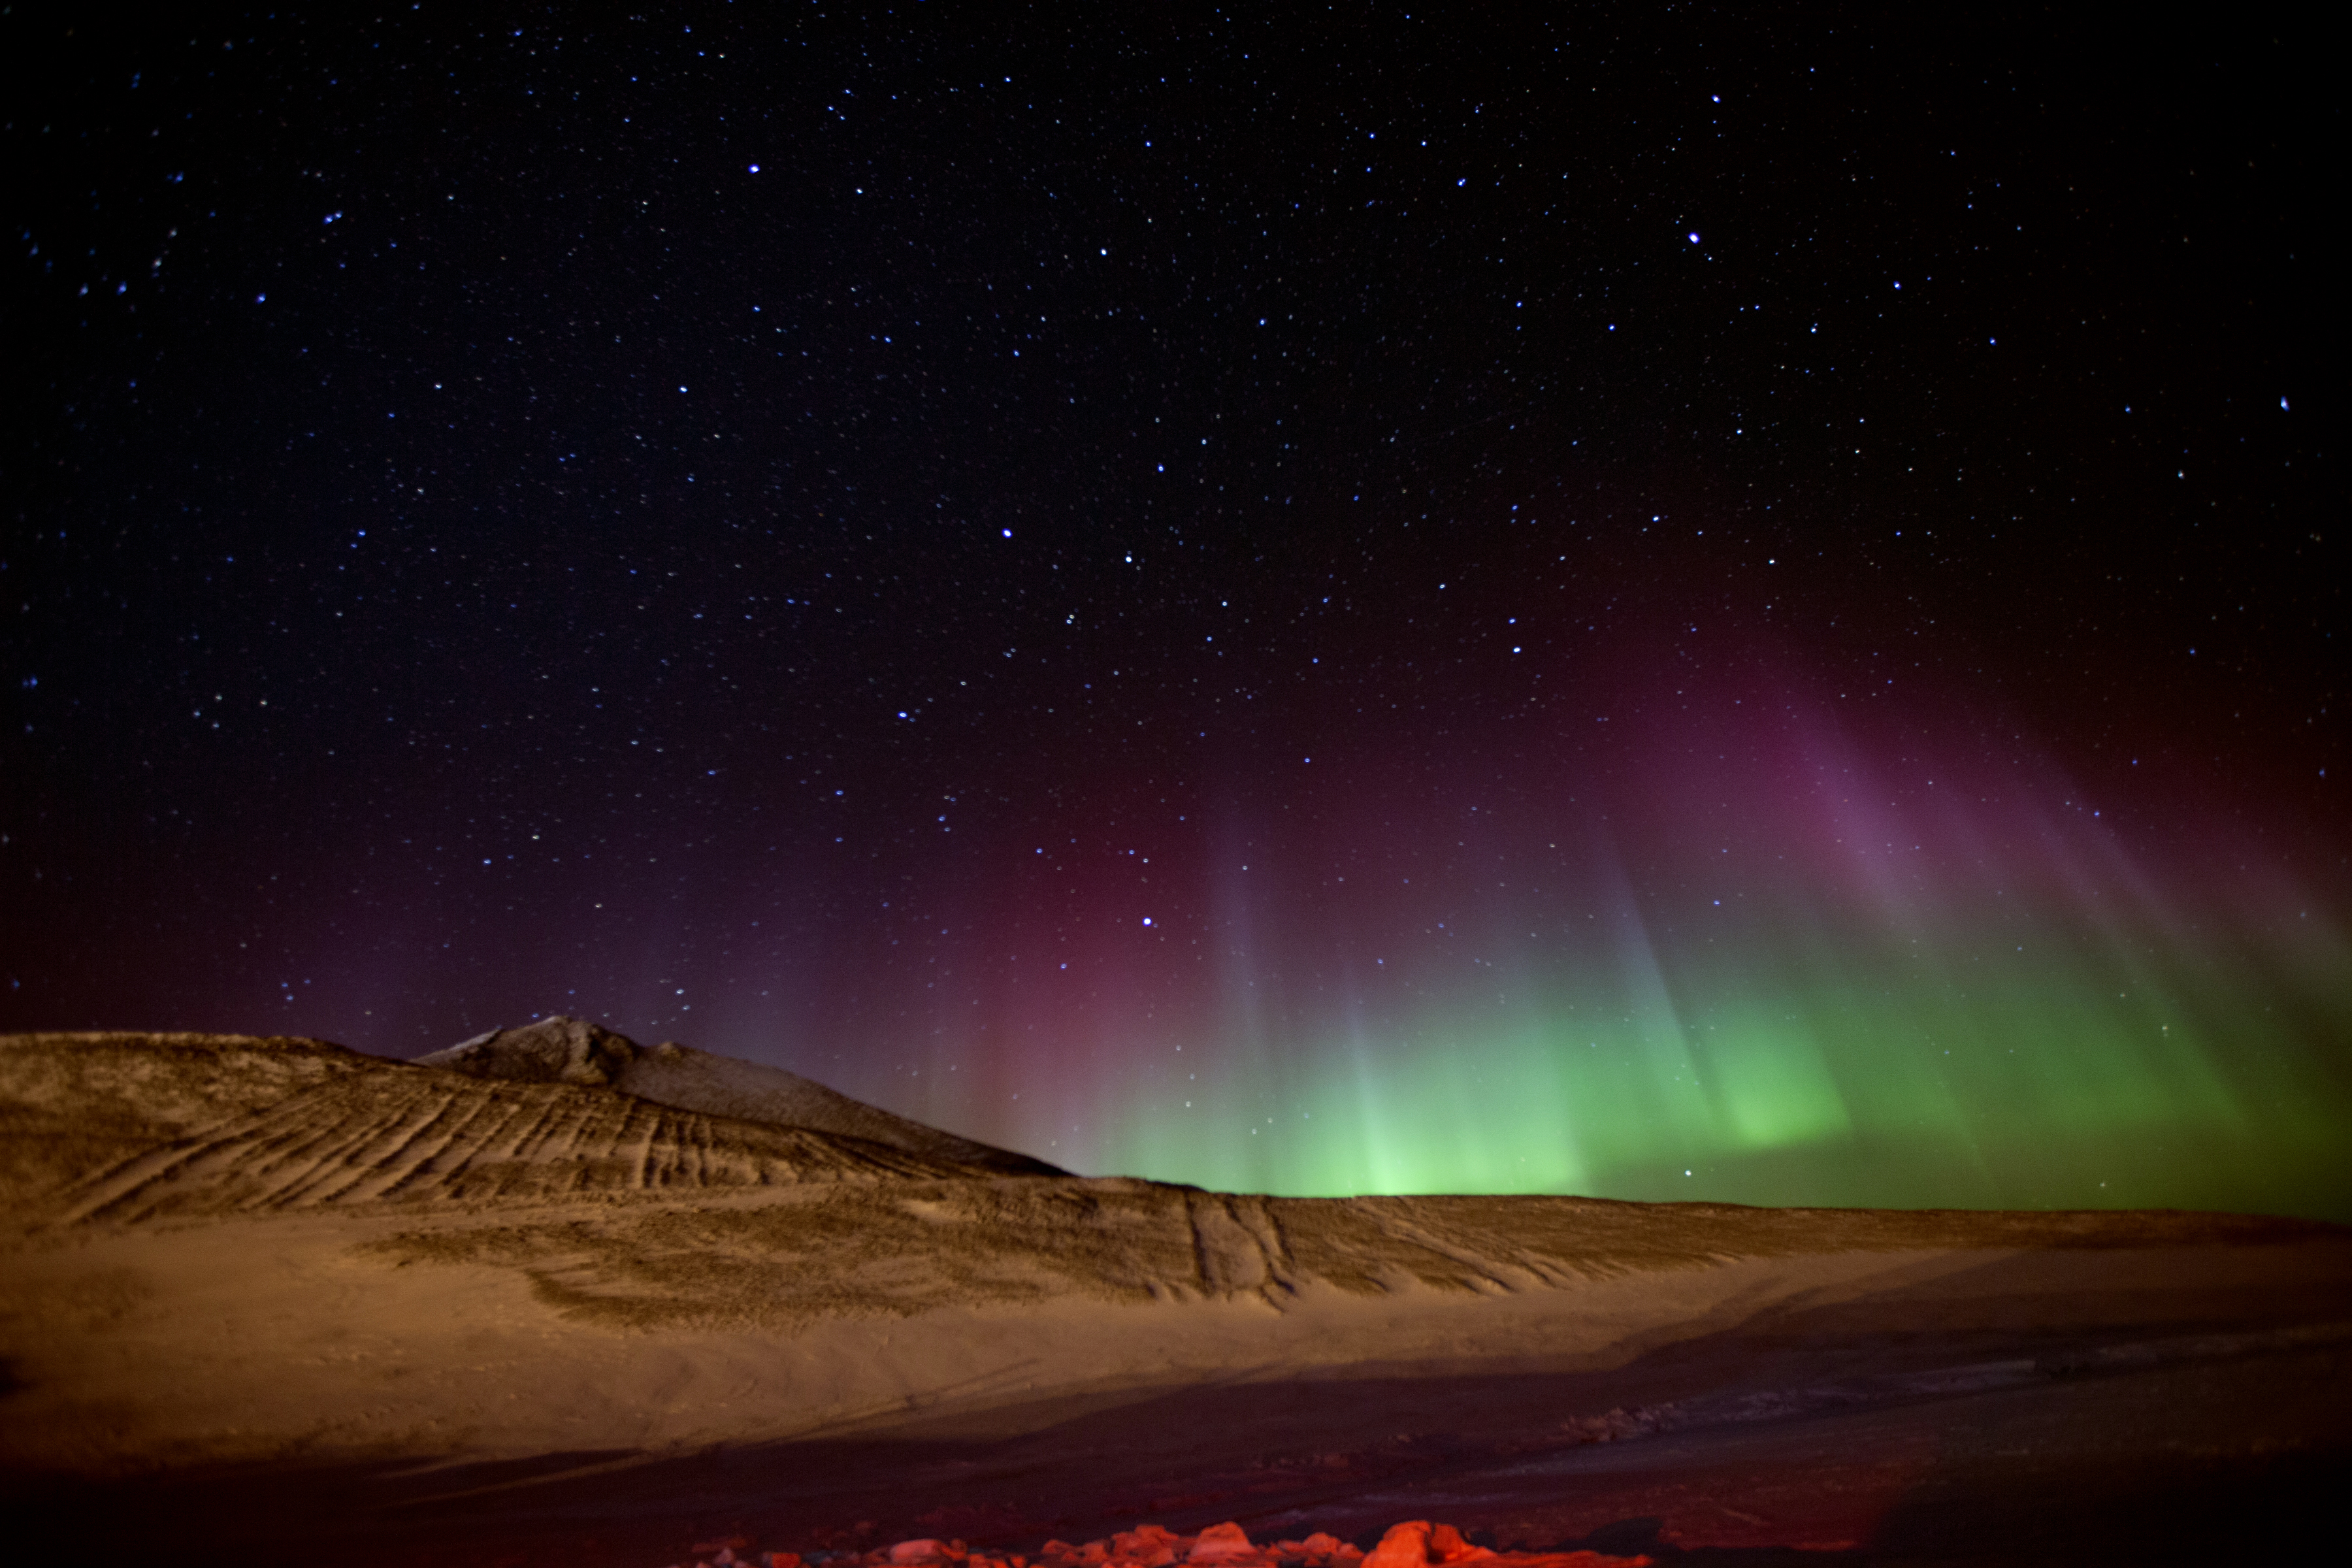 Auroras and Milky Way illuminate the night sky over Ross Island.